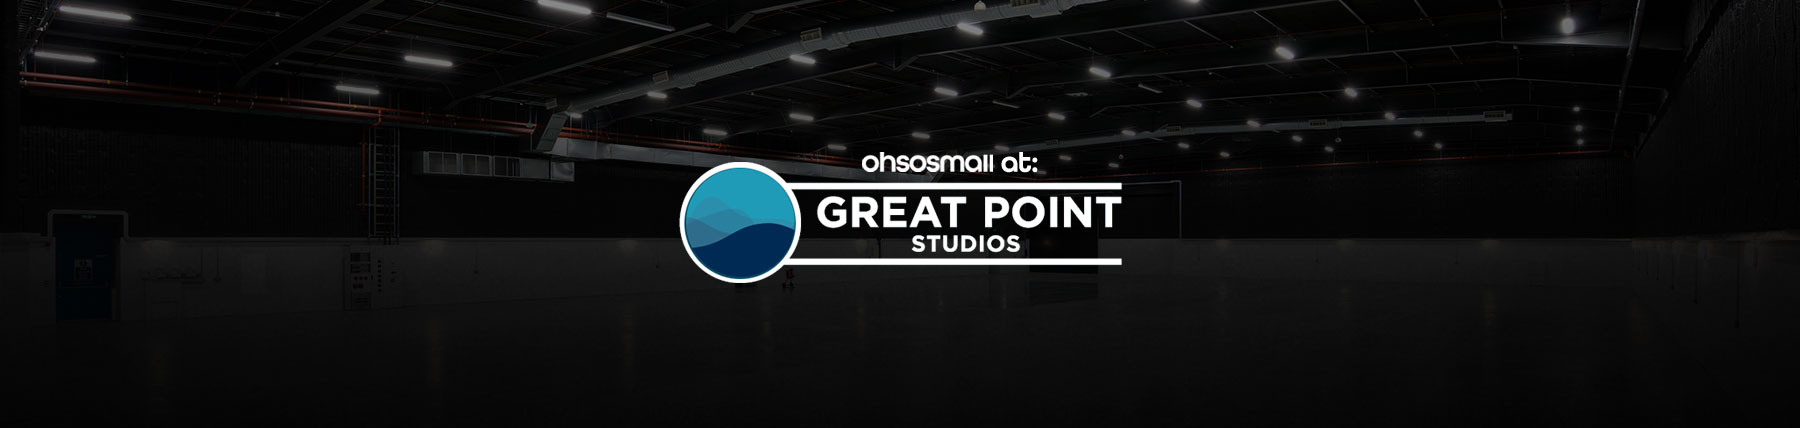 Great Point Studios Cardiff